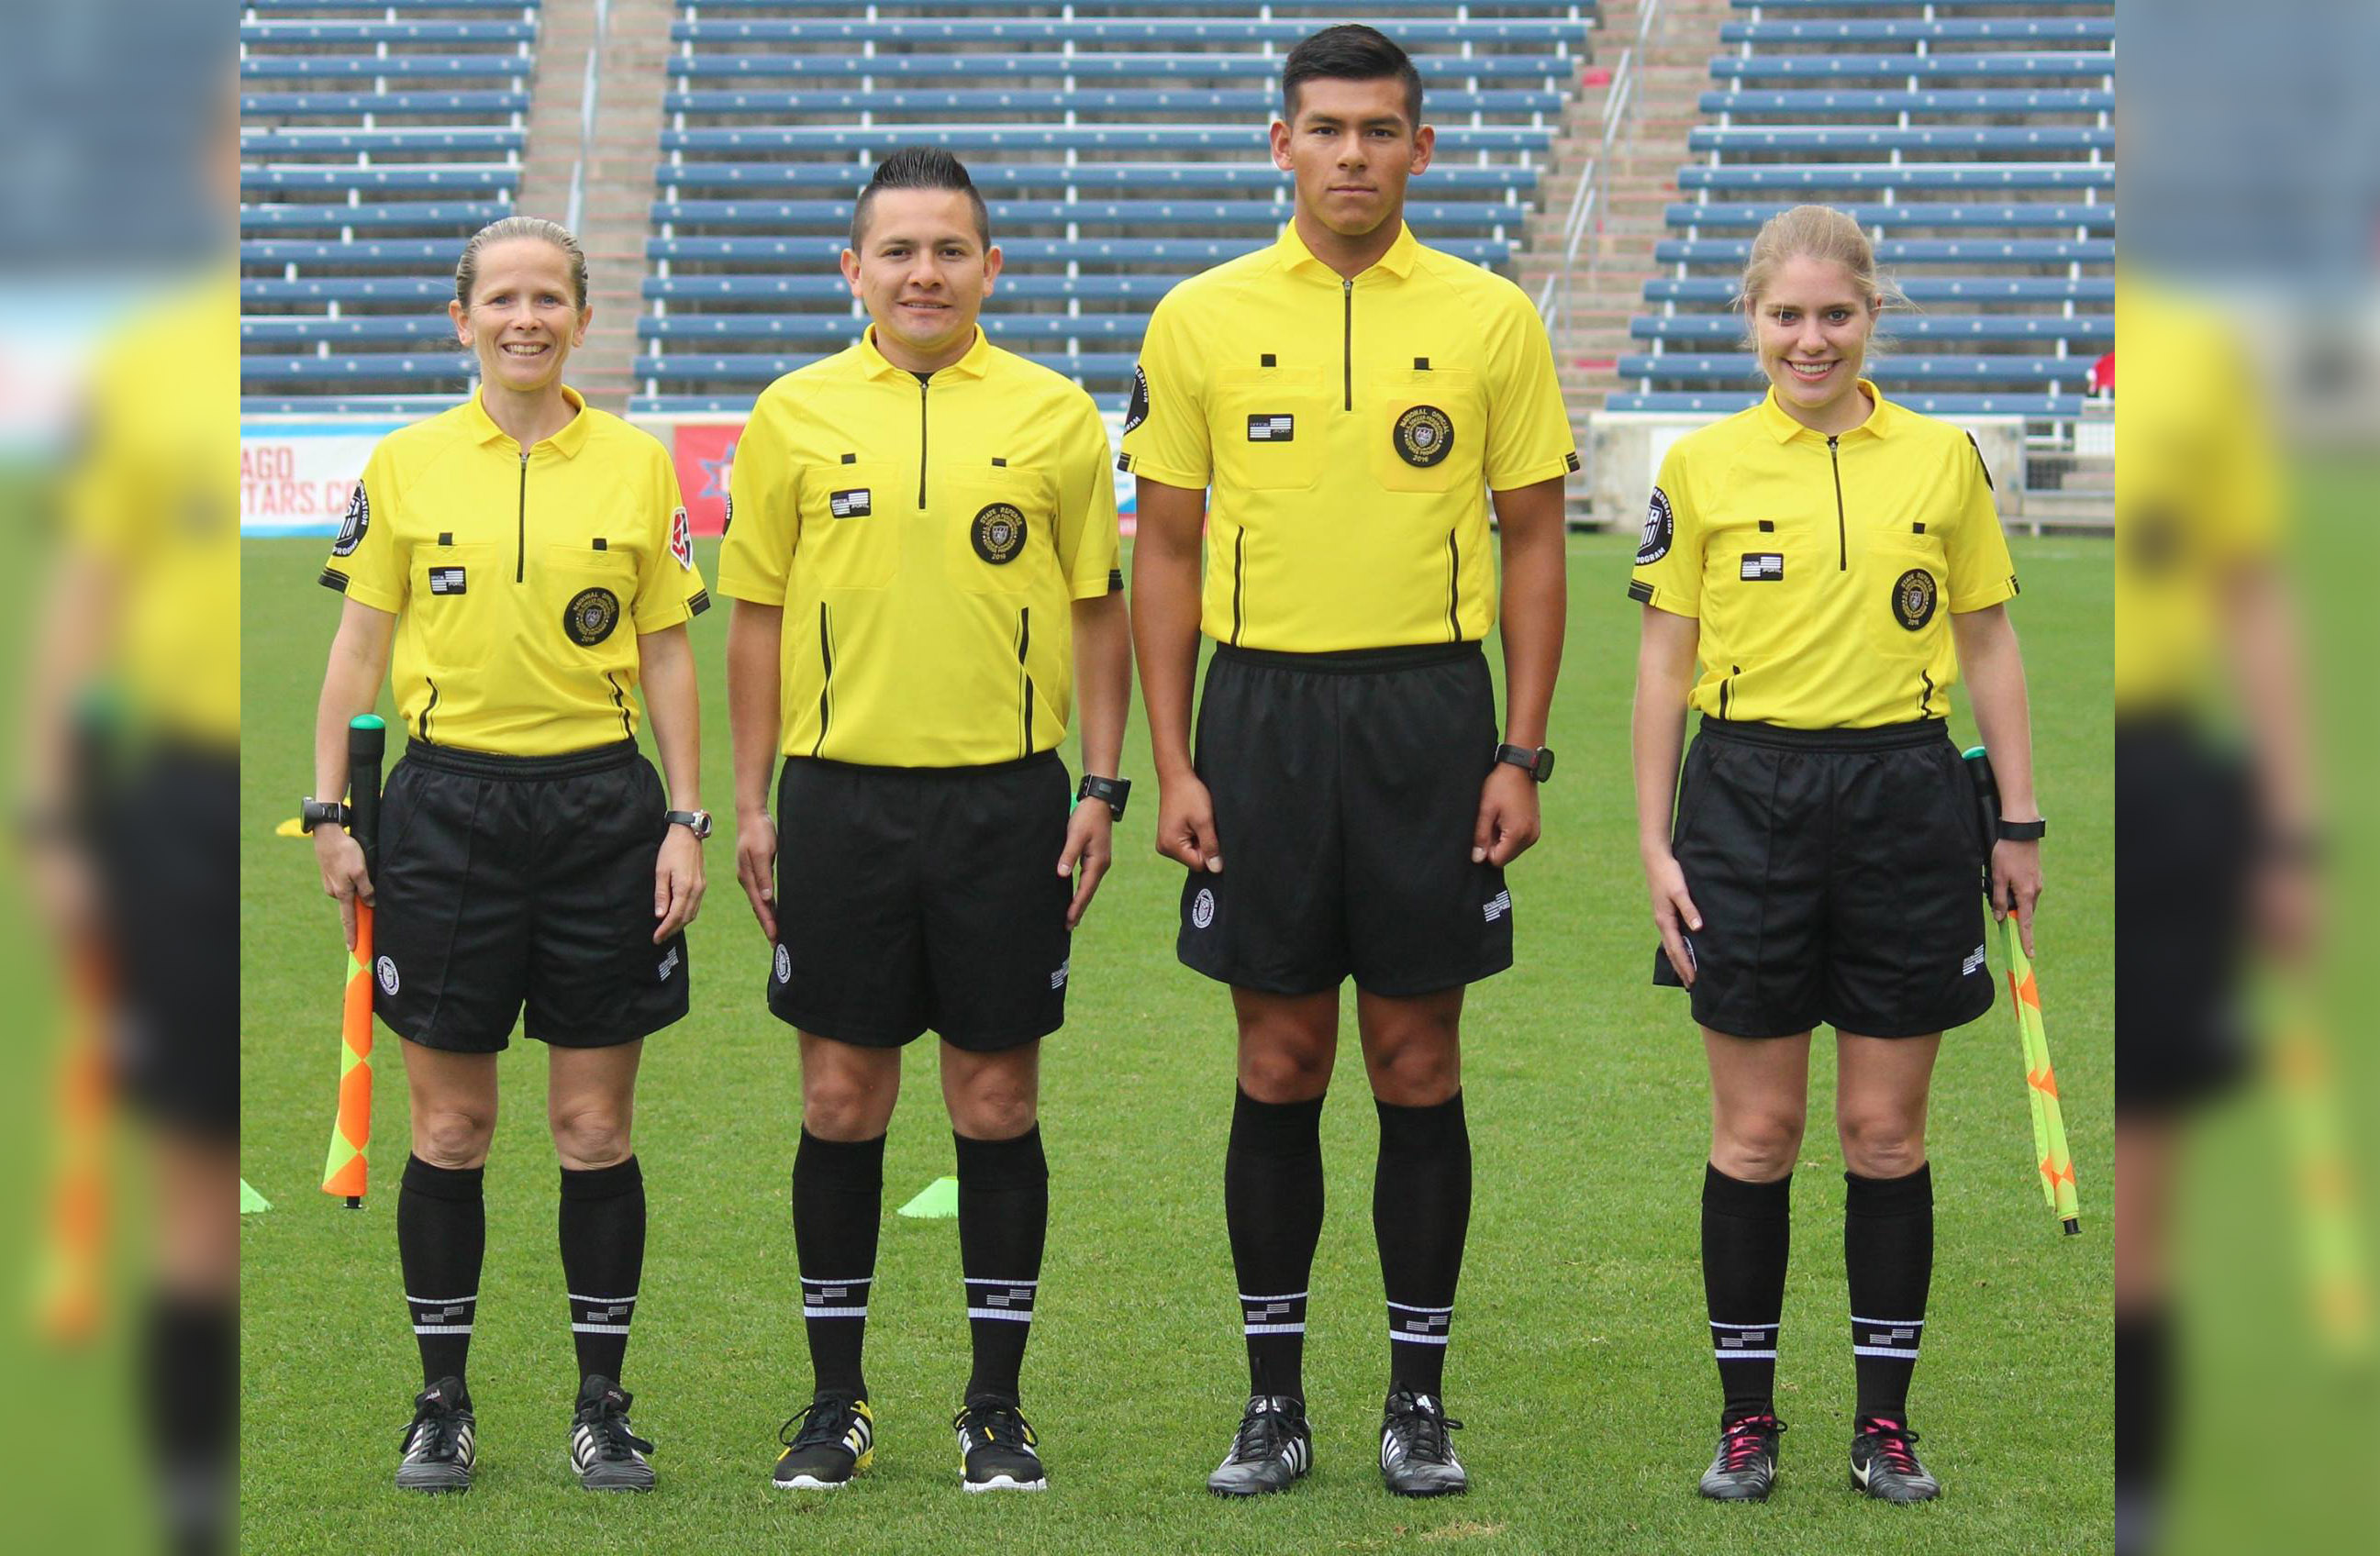 ussf referee jersey